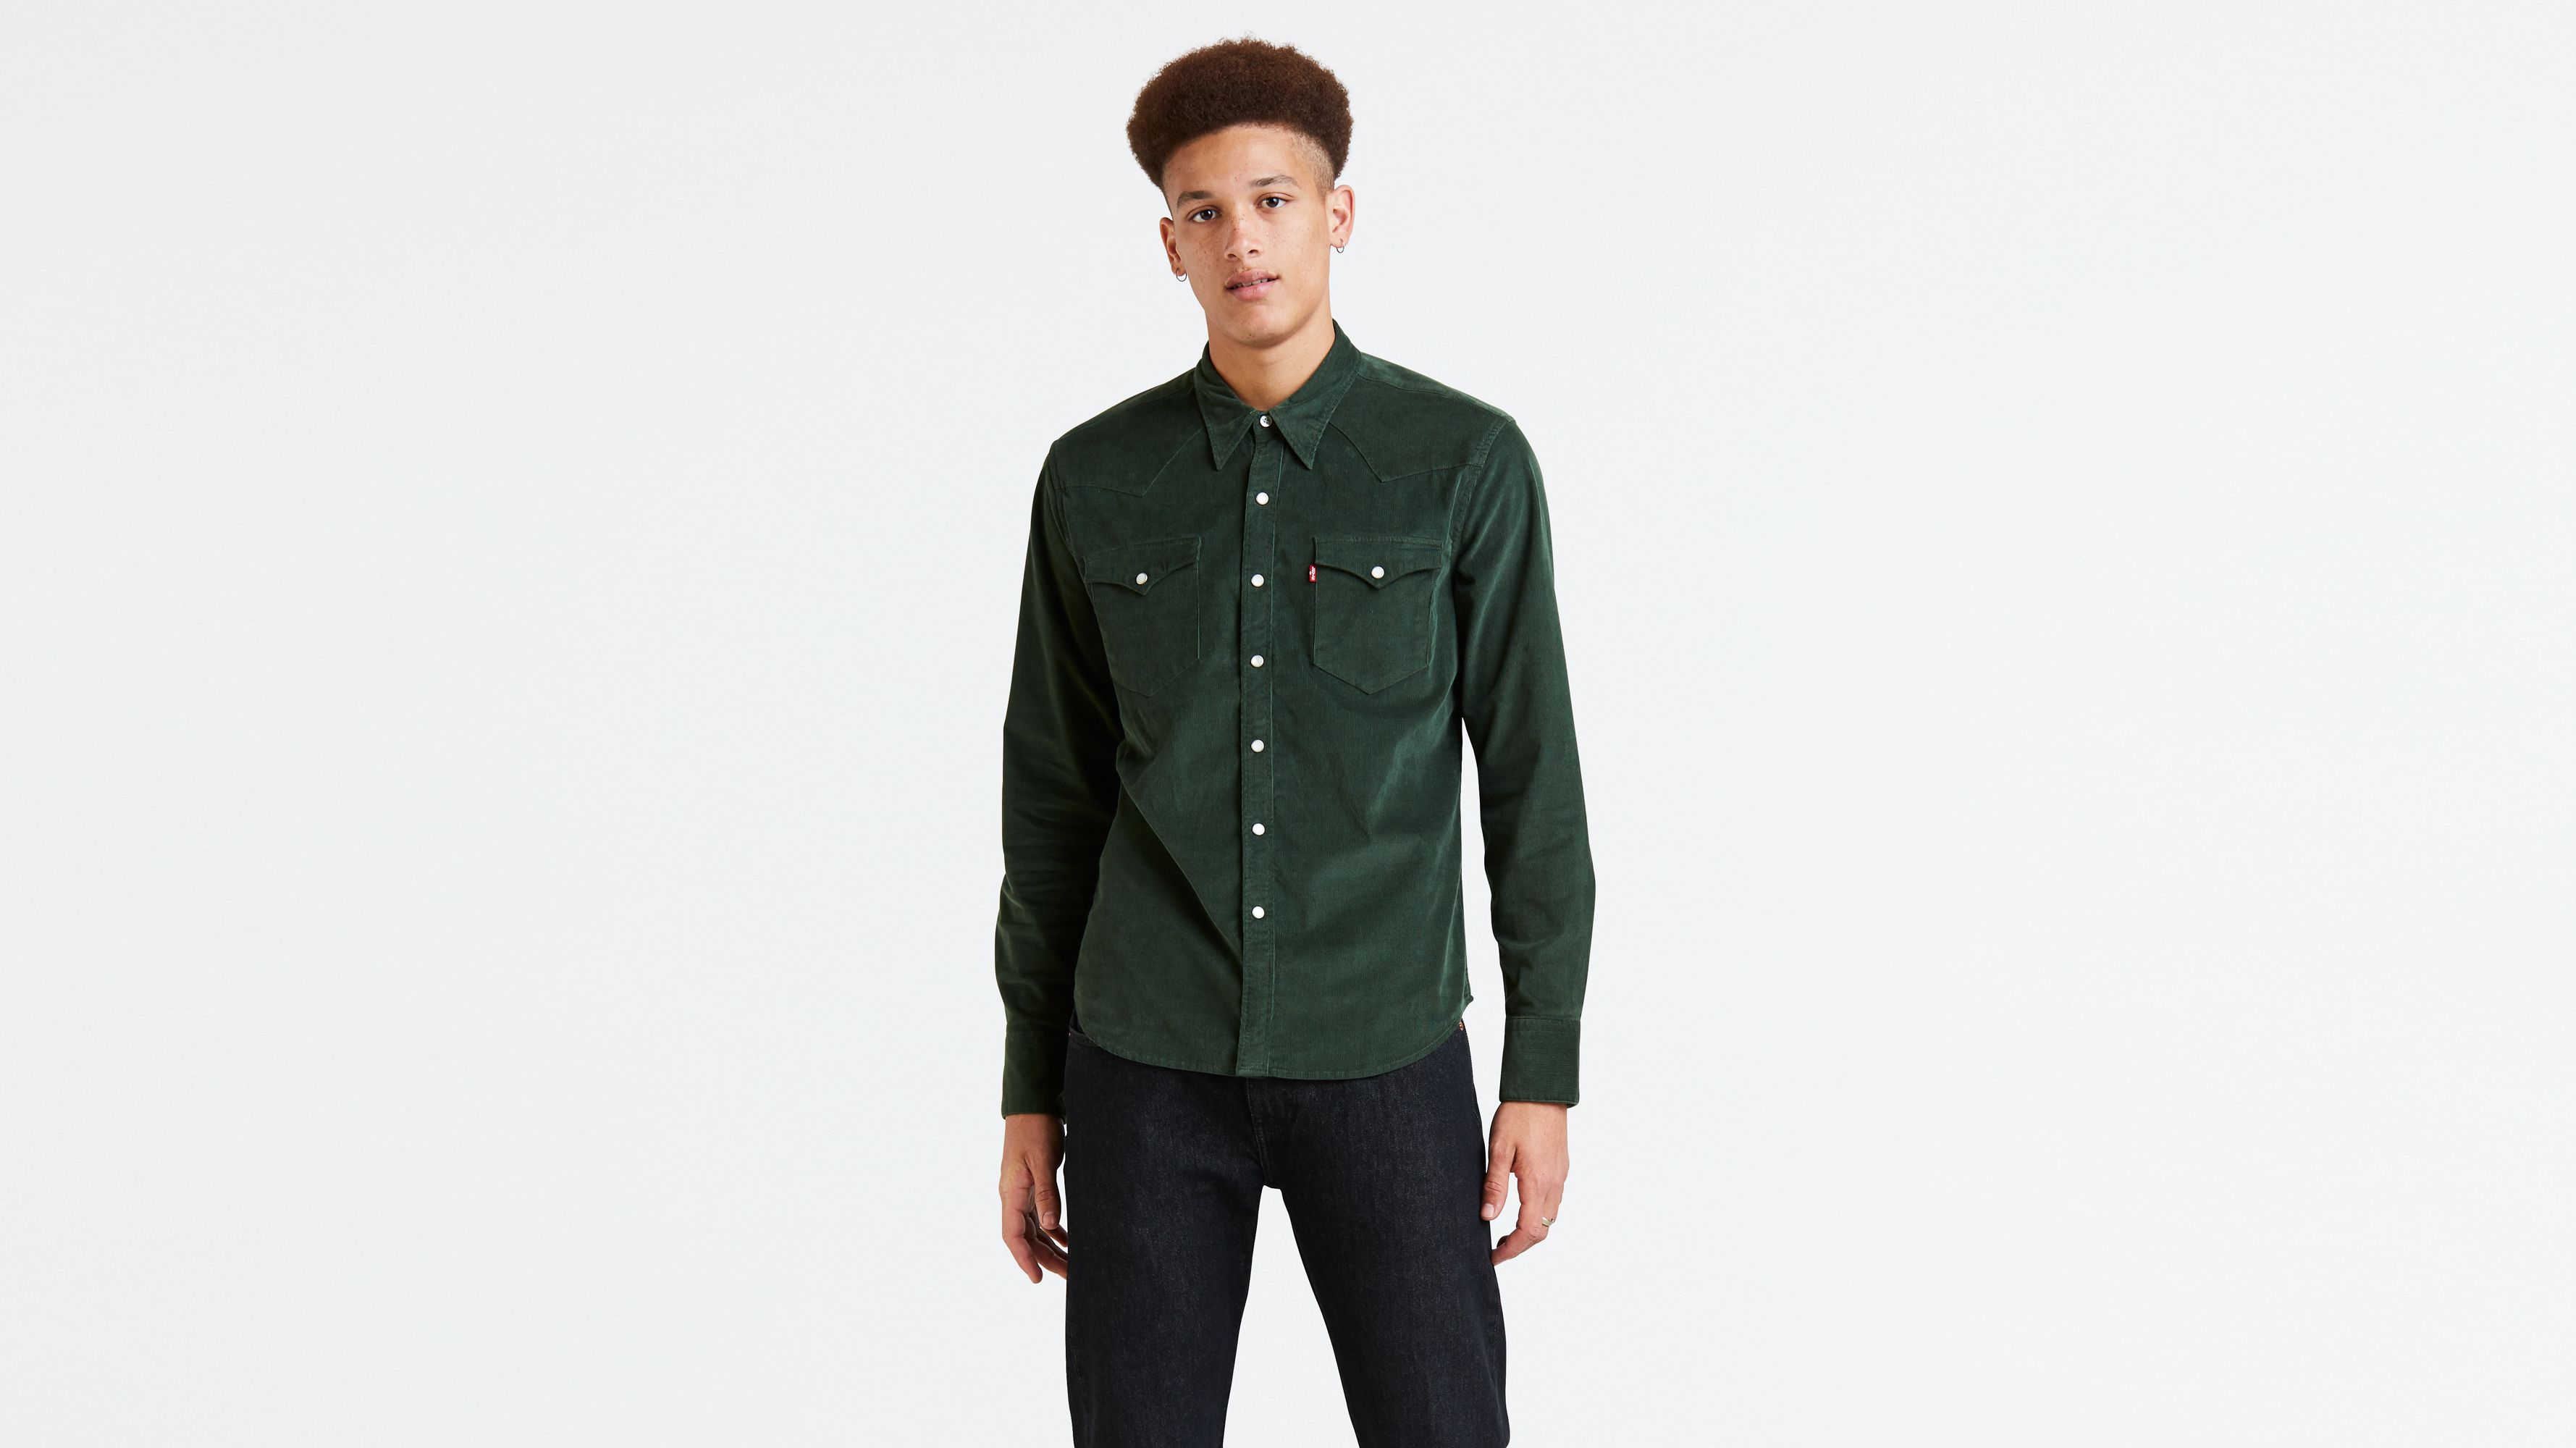 levis green corduroy shirt